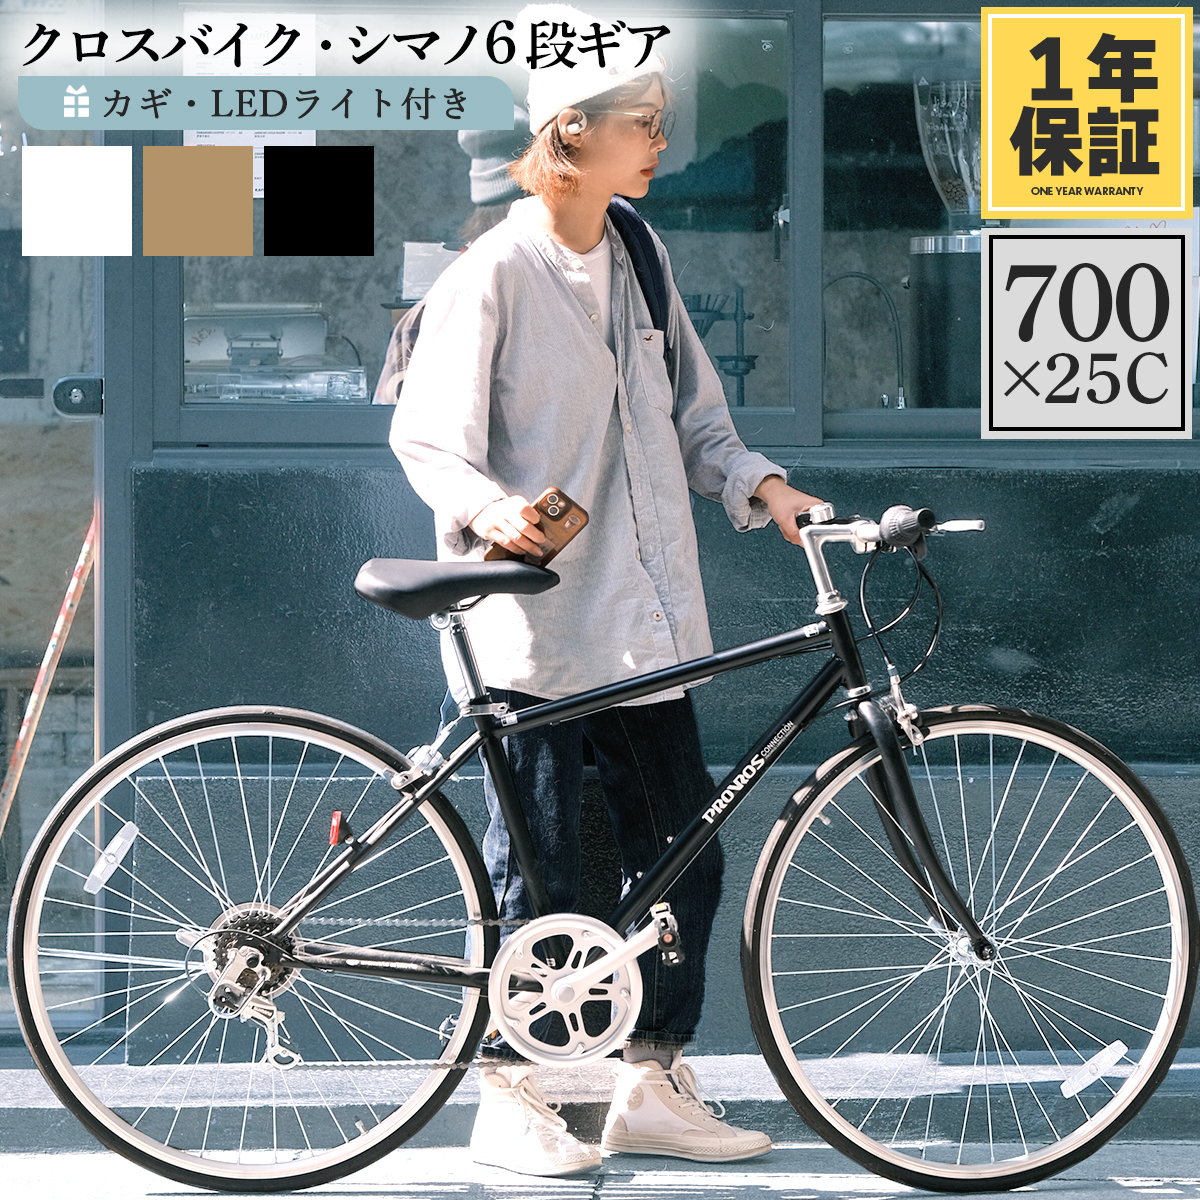 PROVROS クロスバイク 自転車 700×25C シマノ 6段変速ギア ライト ワイヤー錠 スポーツバイク 初心者 通勤 通学 軽量 P-700